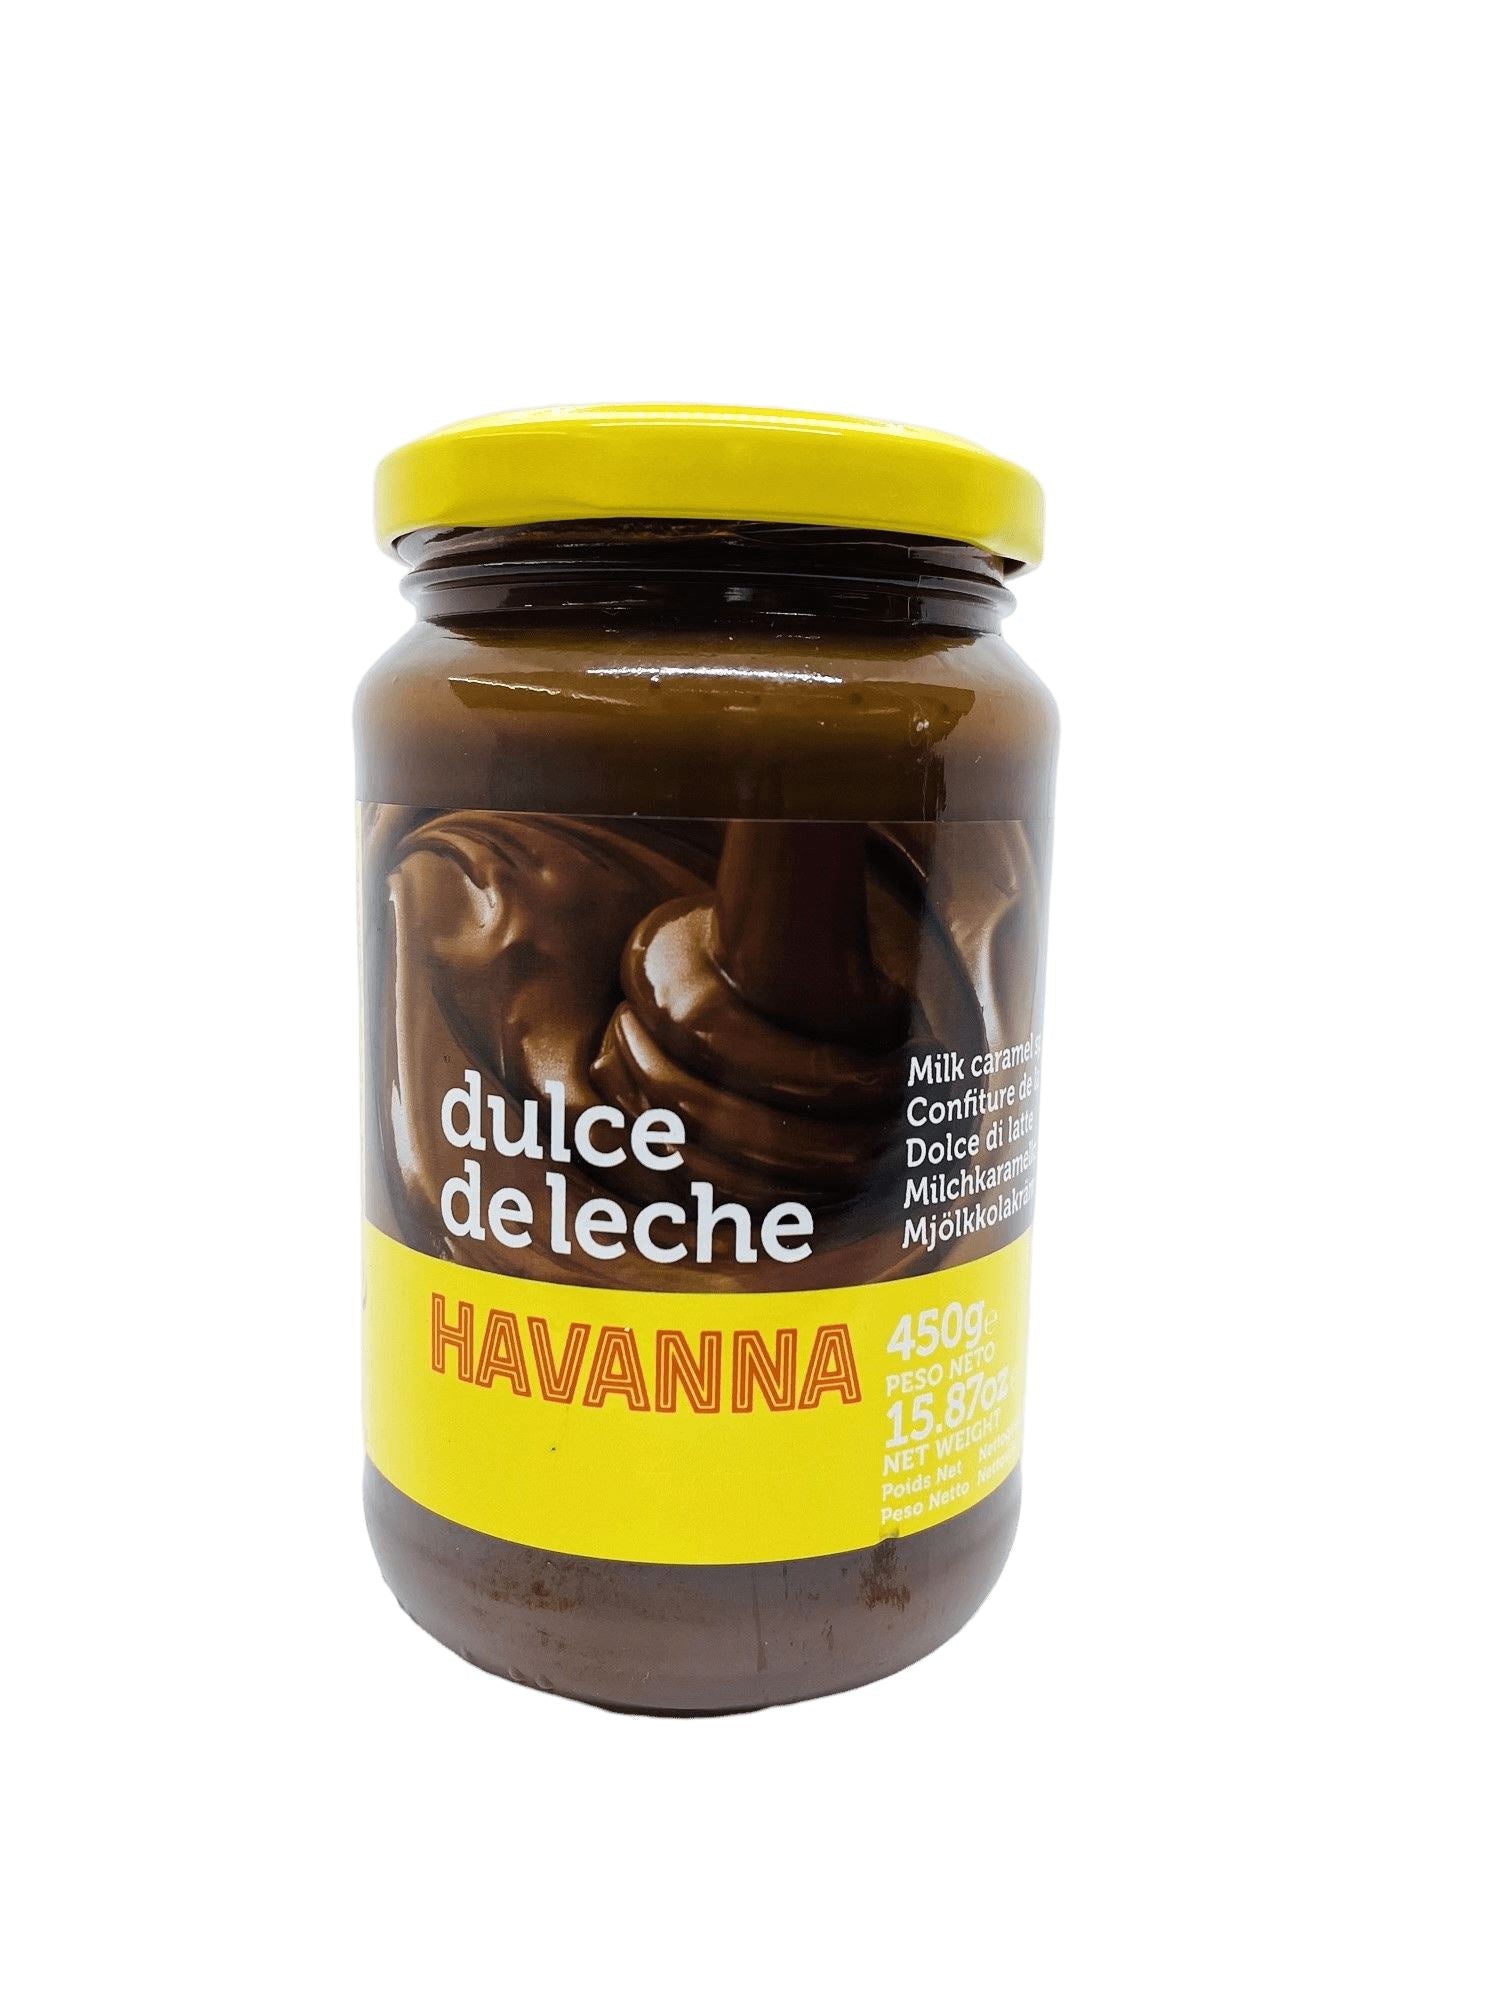 Havanna Caramel Jam (Dulce de leche) 450g Miscellaneous Havanna 